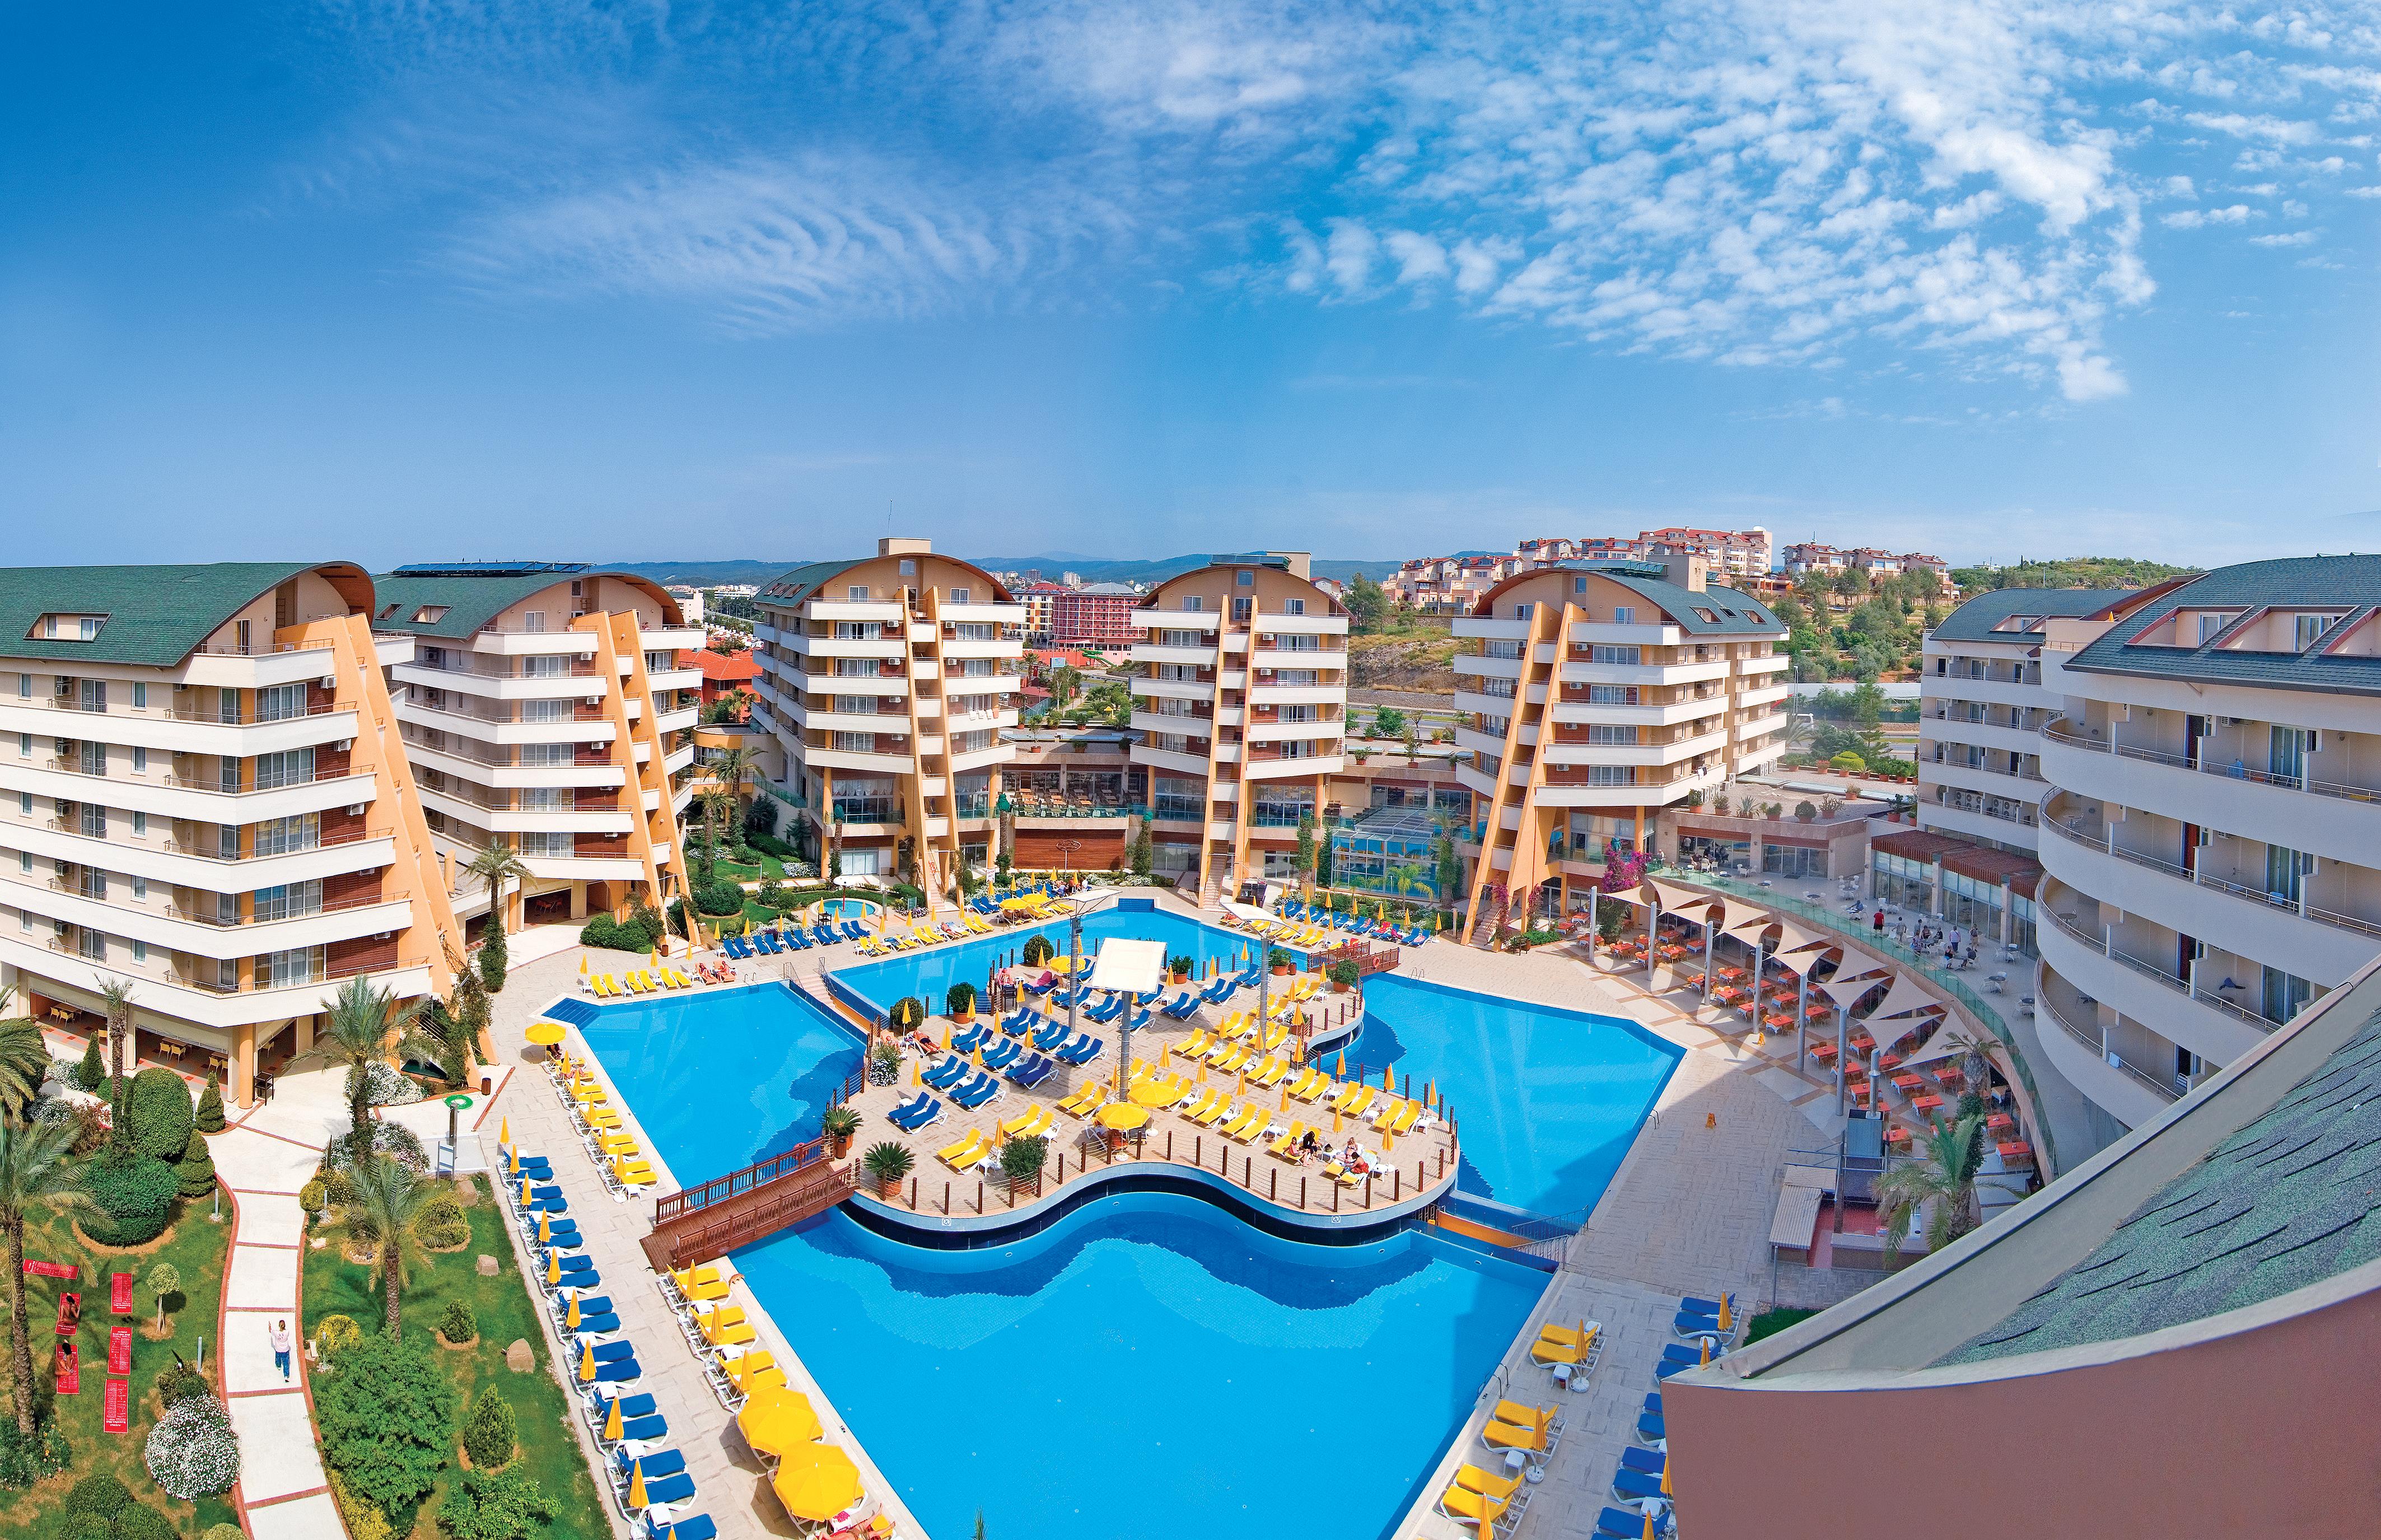 Hotel resort spa турция 5 аланья. Турция,Аланья,Alaiye Resort. Alaiye Resort Spa Hotel 5 Турция. Алая Резорт 5 в Алании Турция. Алания Резорт спа отель 5.